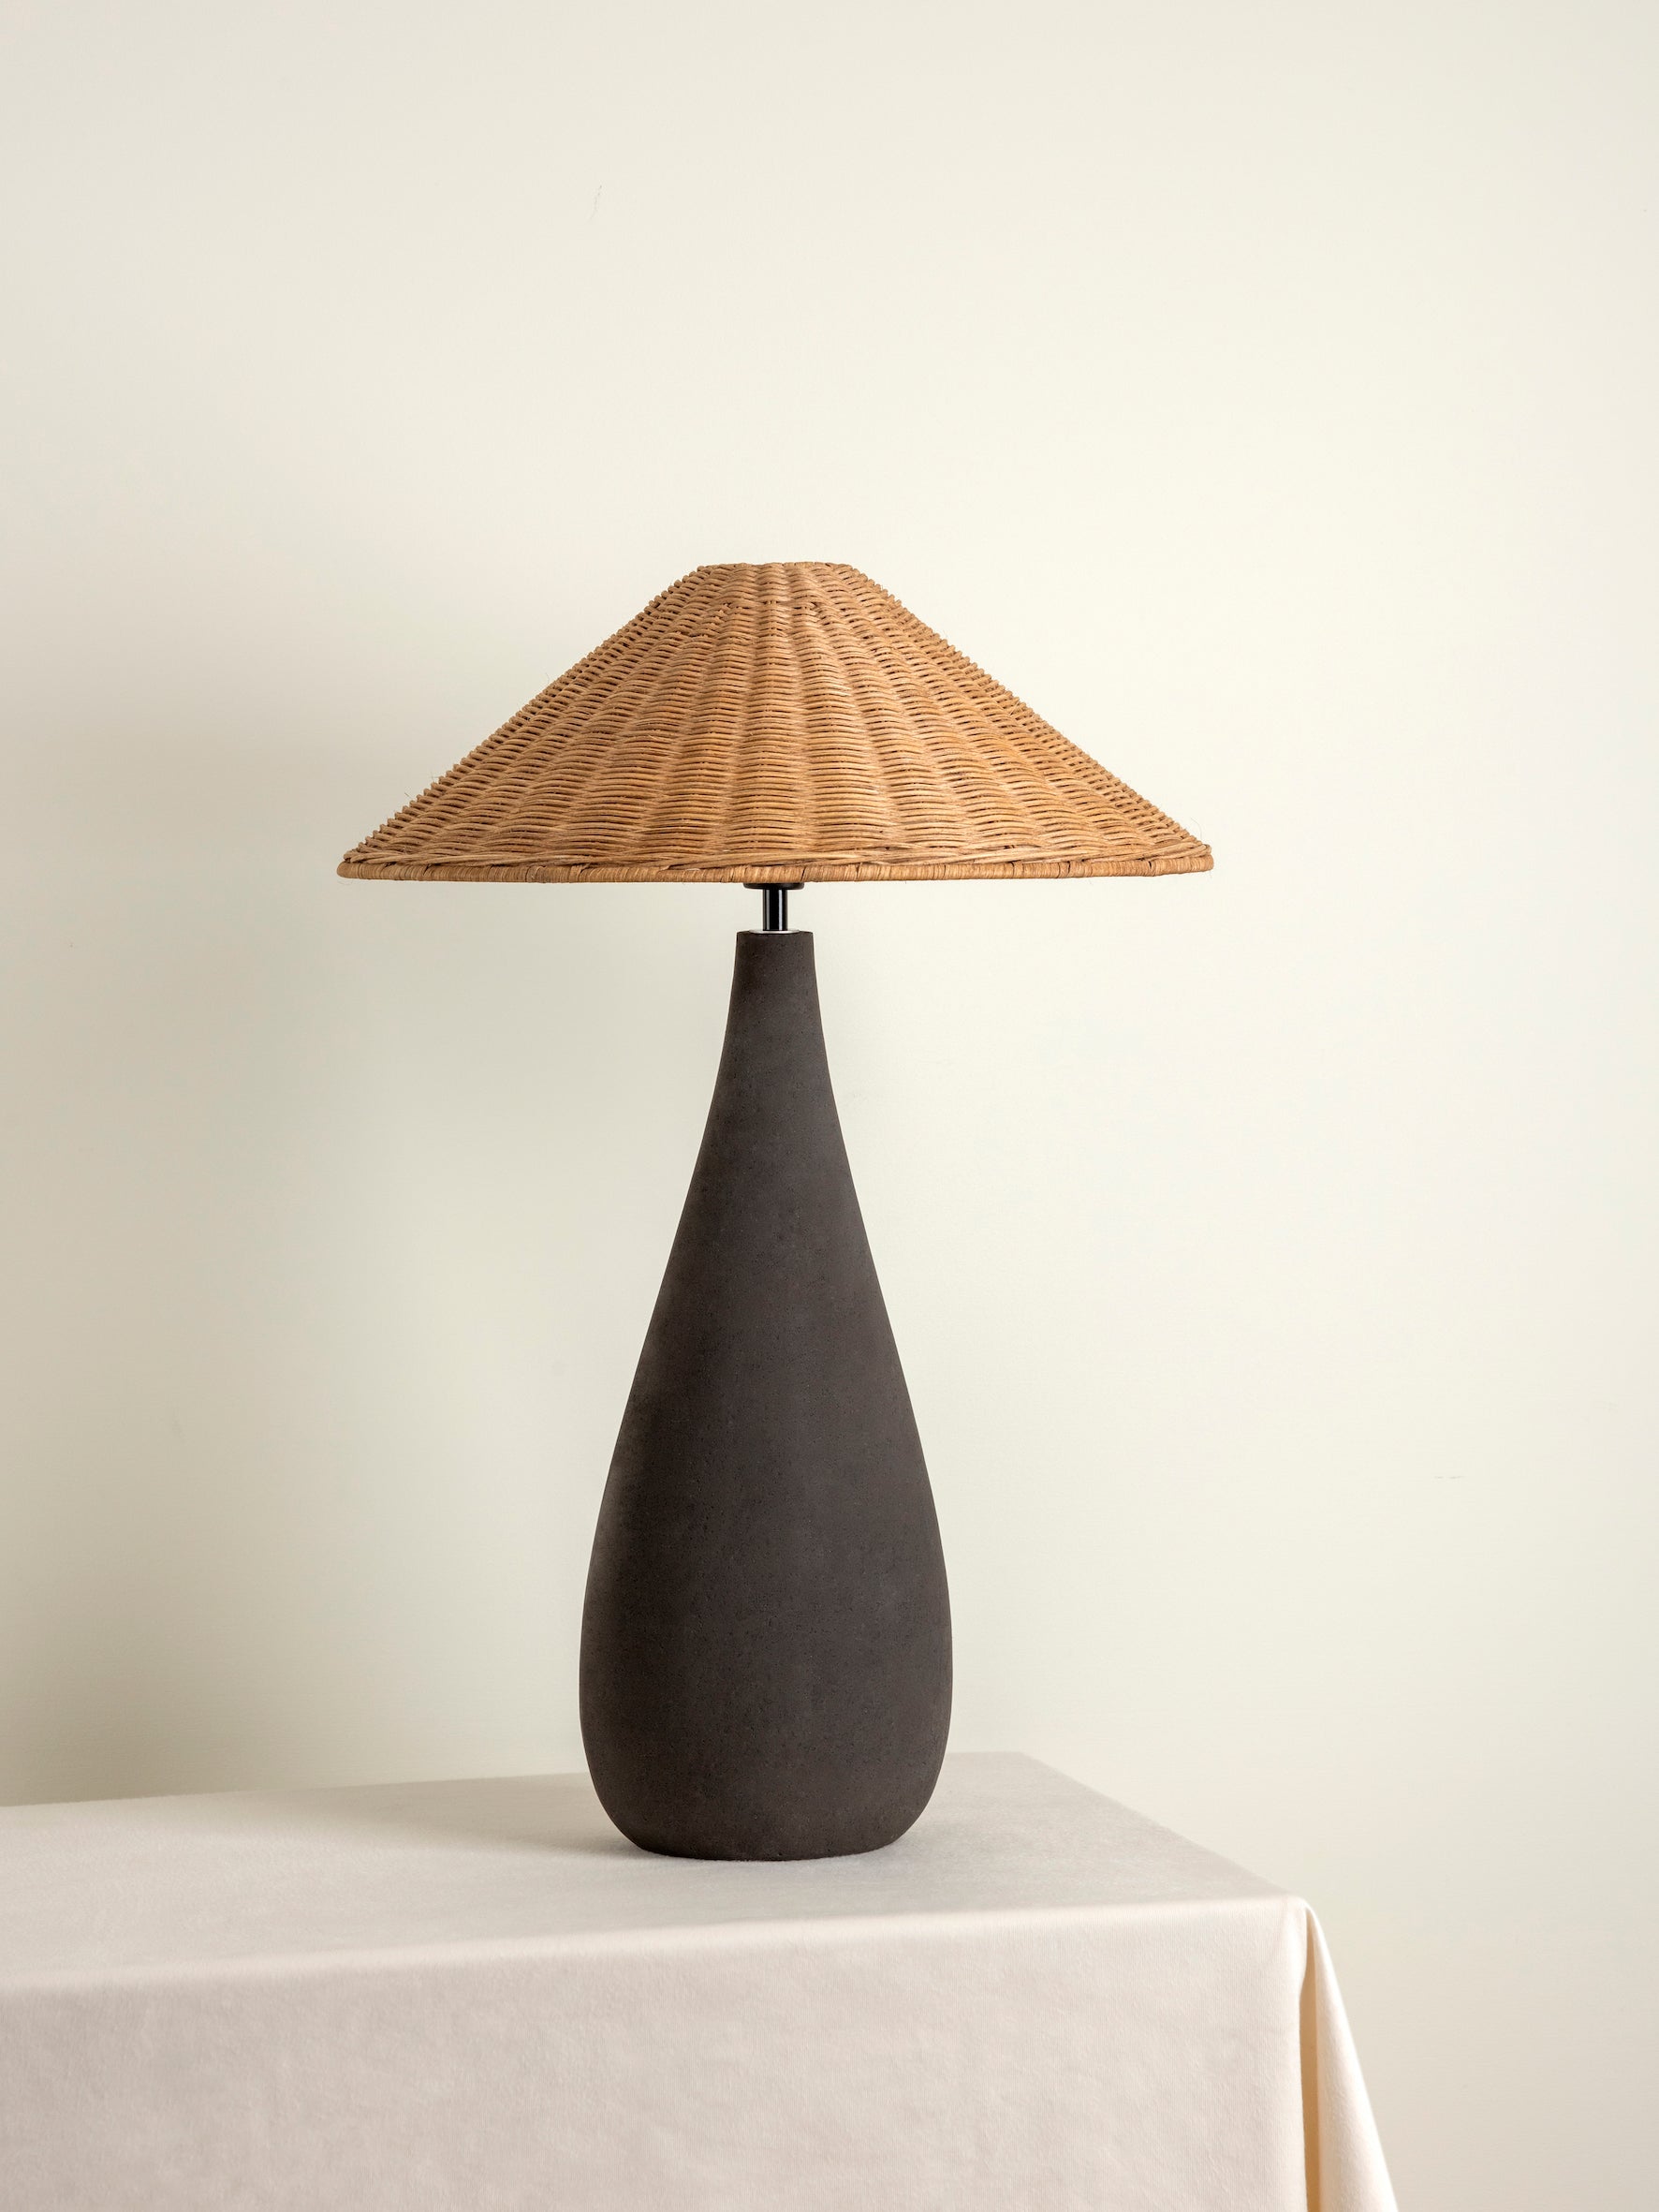 Miata - charcoal concrete and rattan table lamp | Table Lamp | Lights & Lamps Inc | Modern Affordable Designer Lighting | USA